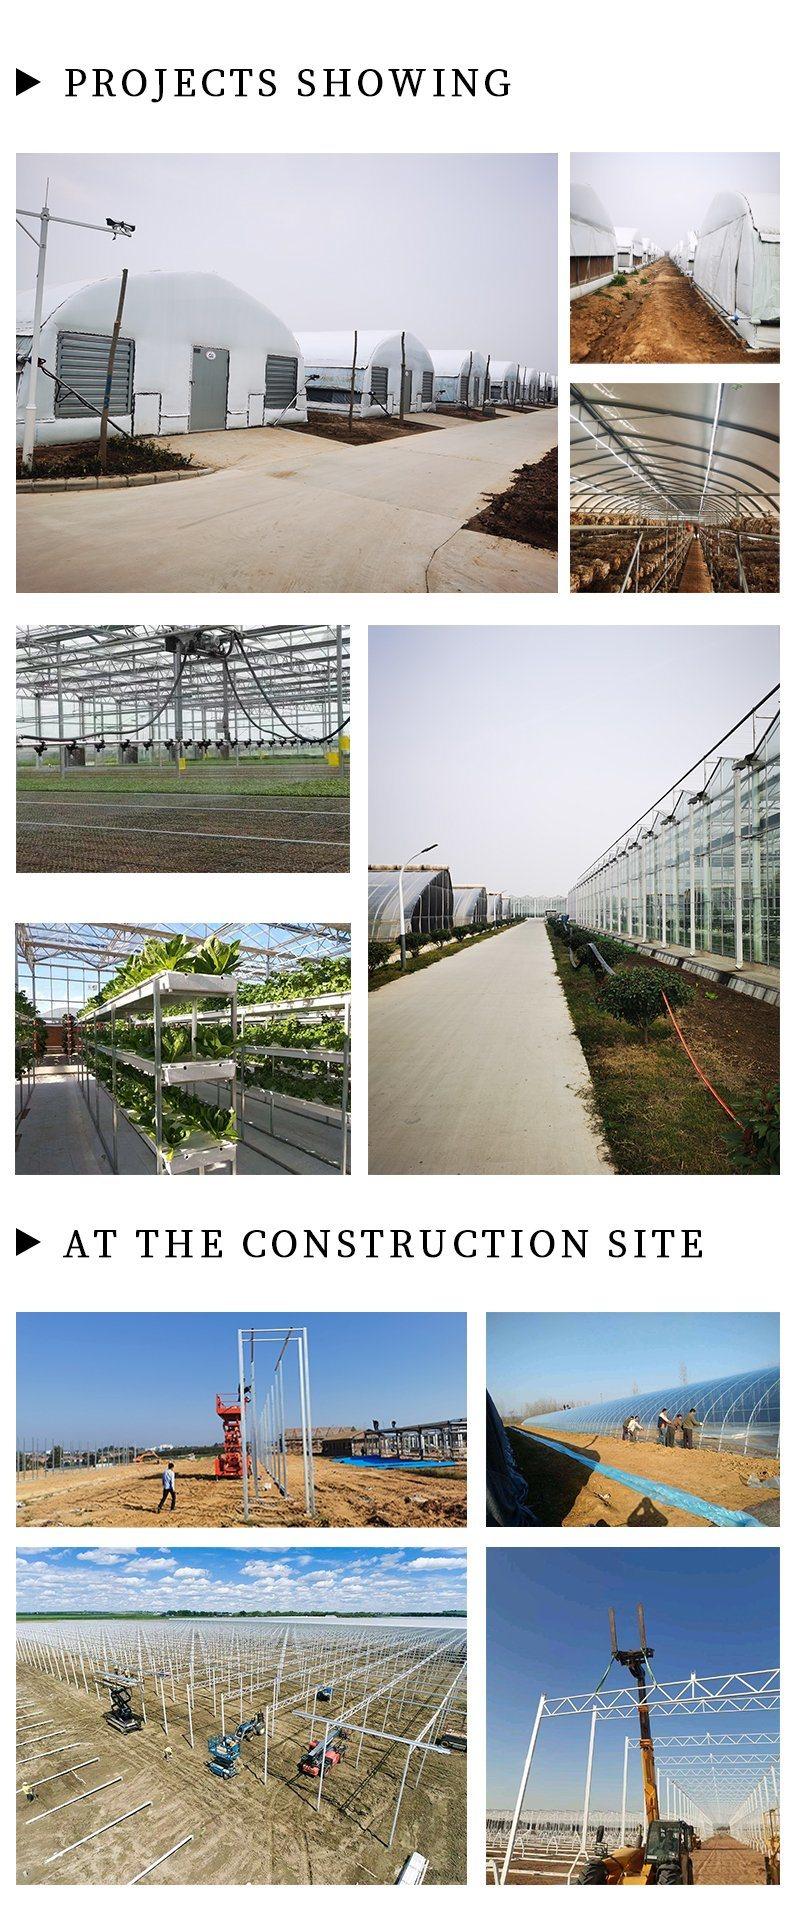 Agriculturel Automatic Irrigation and Fertilization System